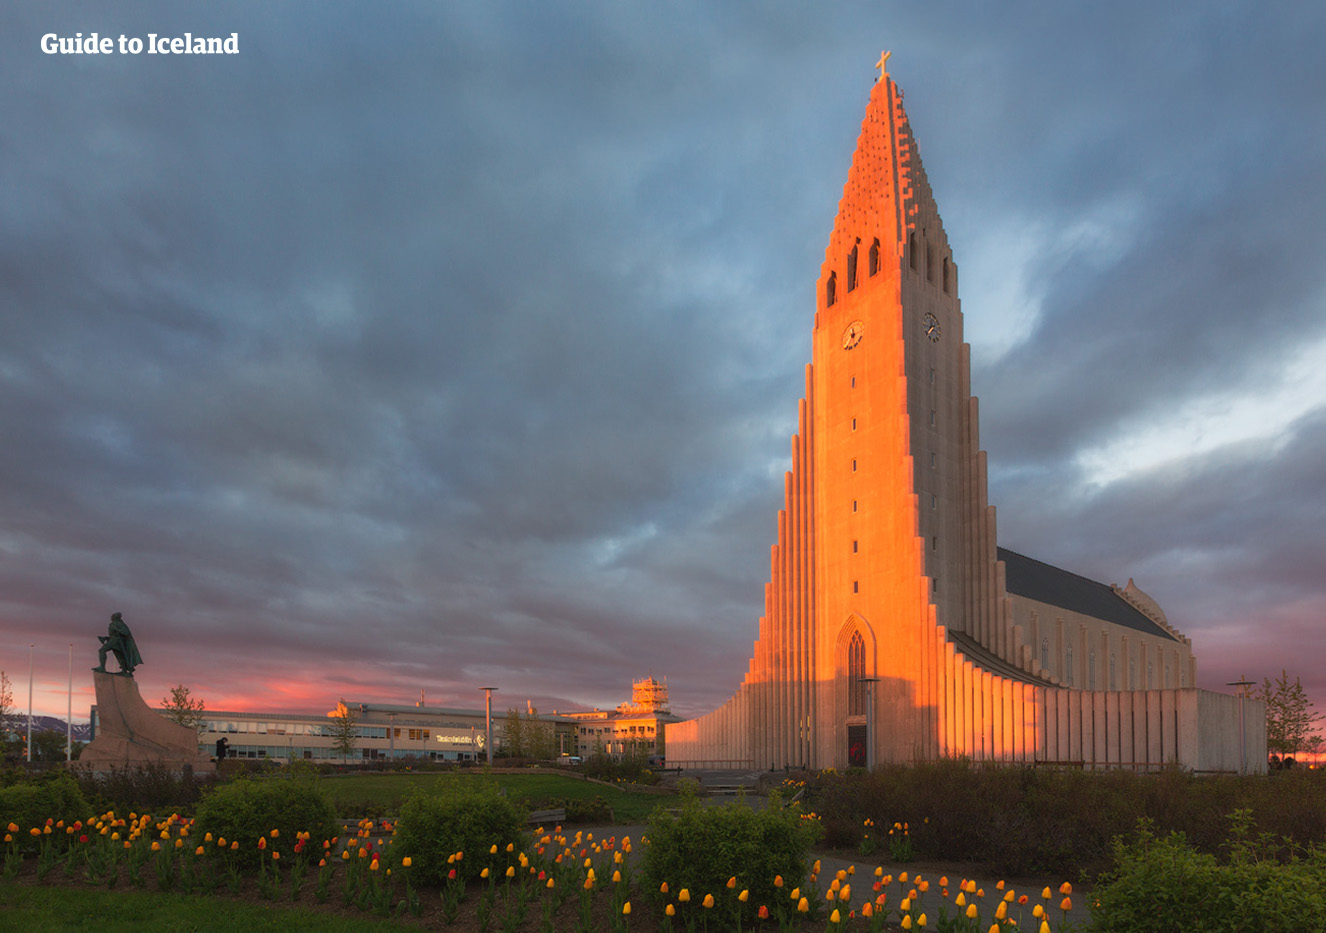 The majestic Hallgrímskirkja church in Reykjavík bathed in the warm glow of the midnight sun